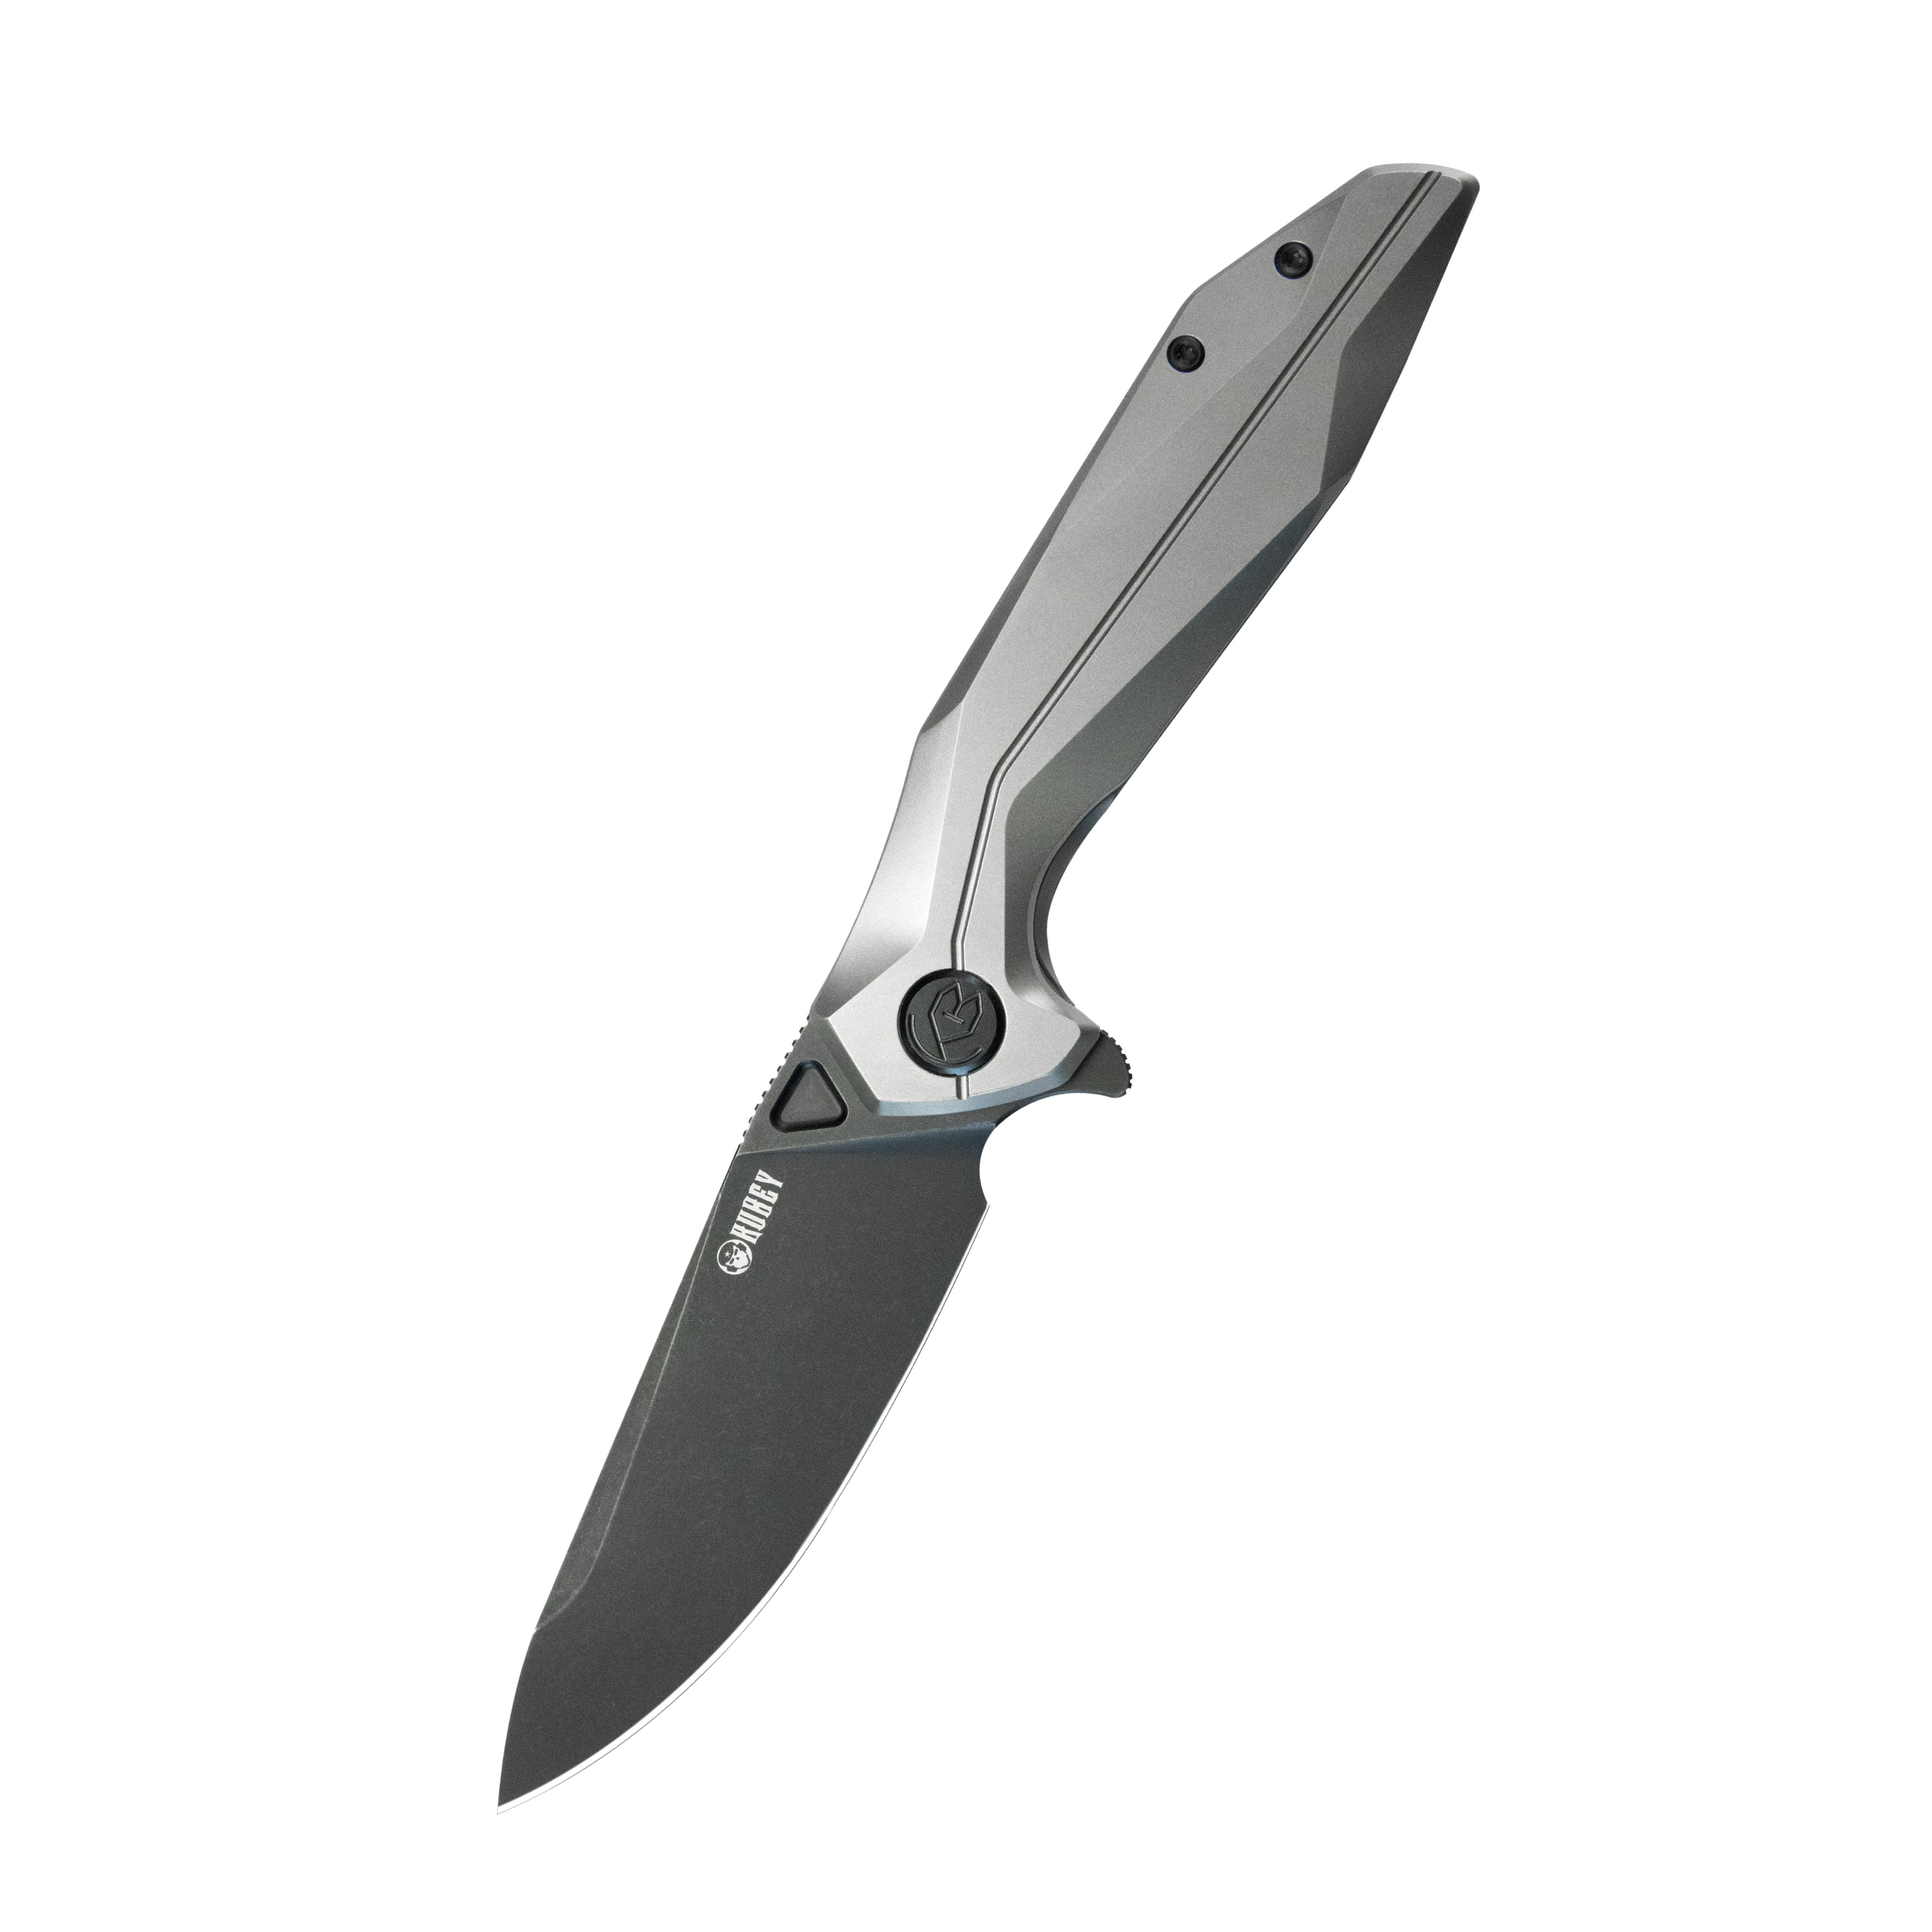 Kubey Nova Frame Lock Flipper Folding Knife Gray 6AL4V Titanium Handle 3.66" Darkwashed 14C28N KB235E